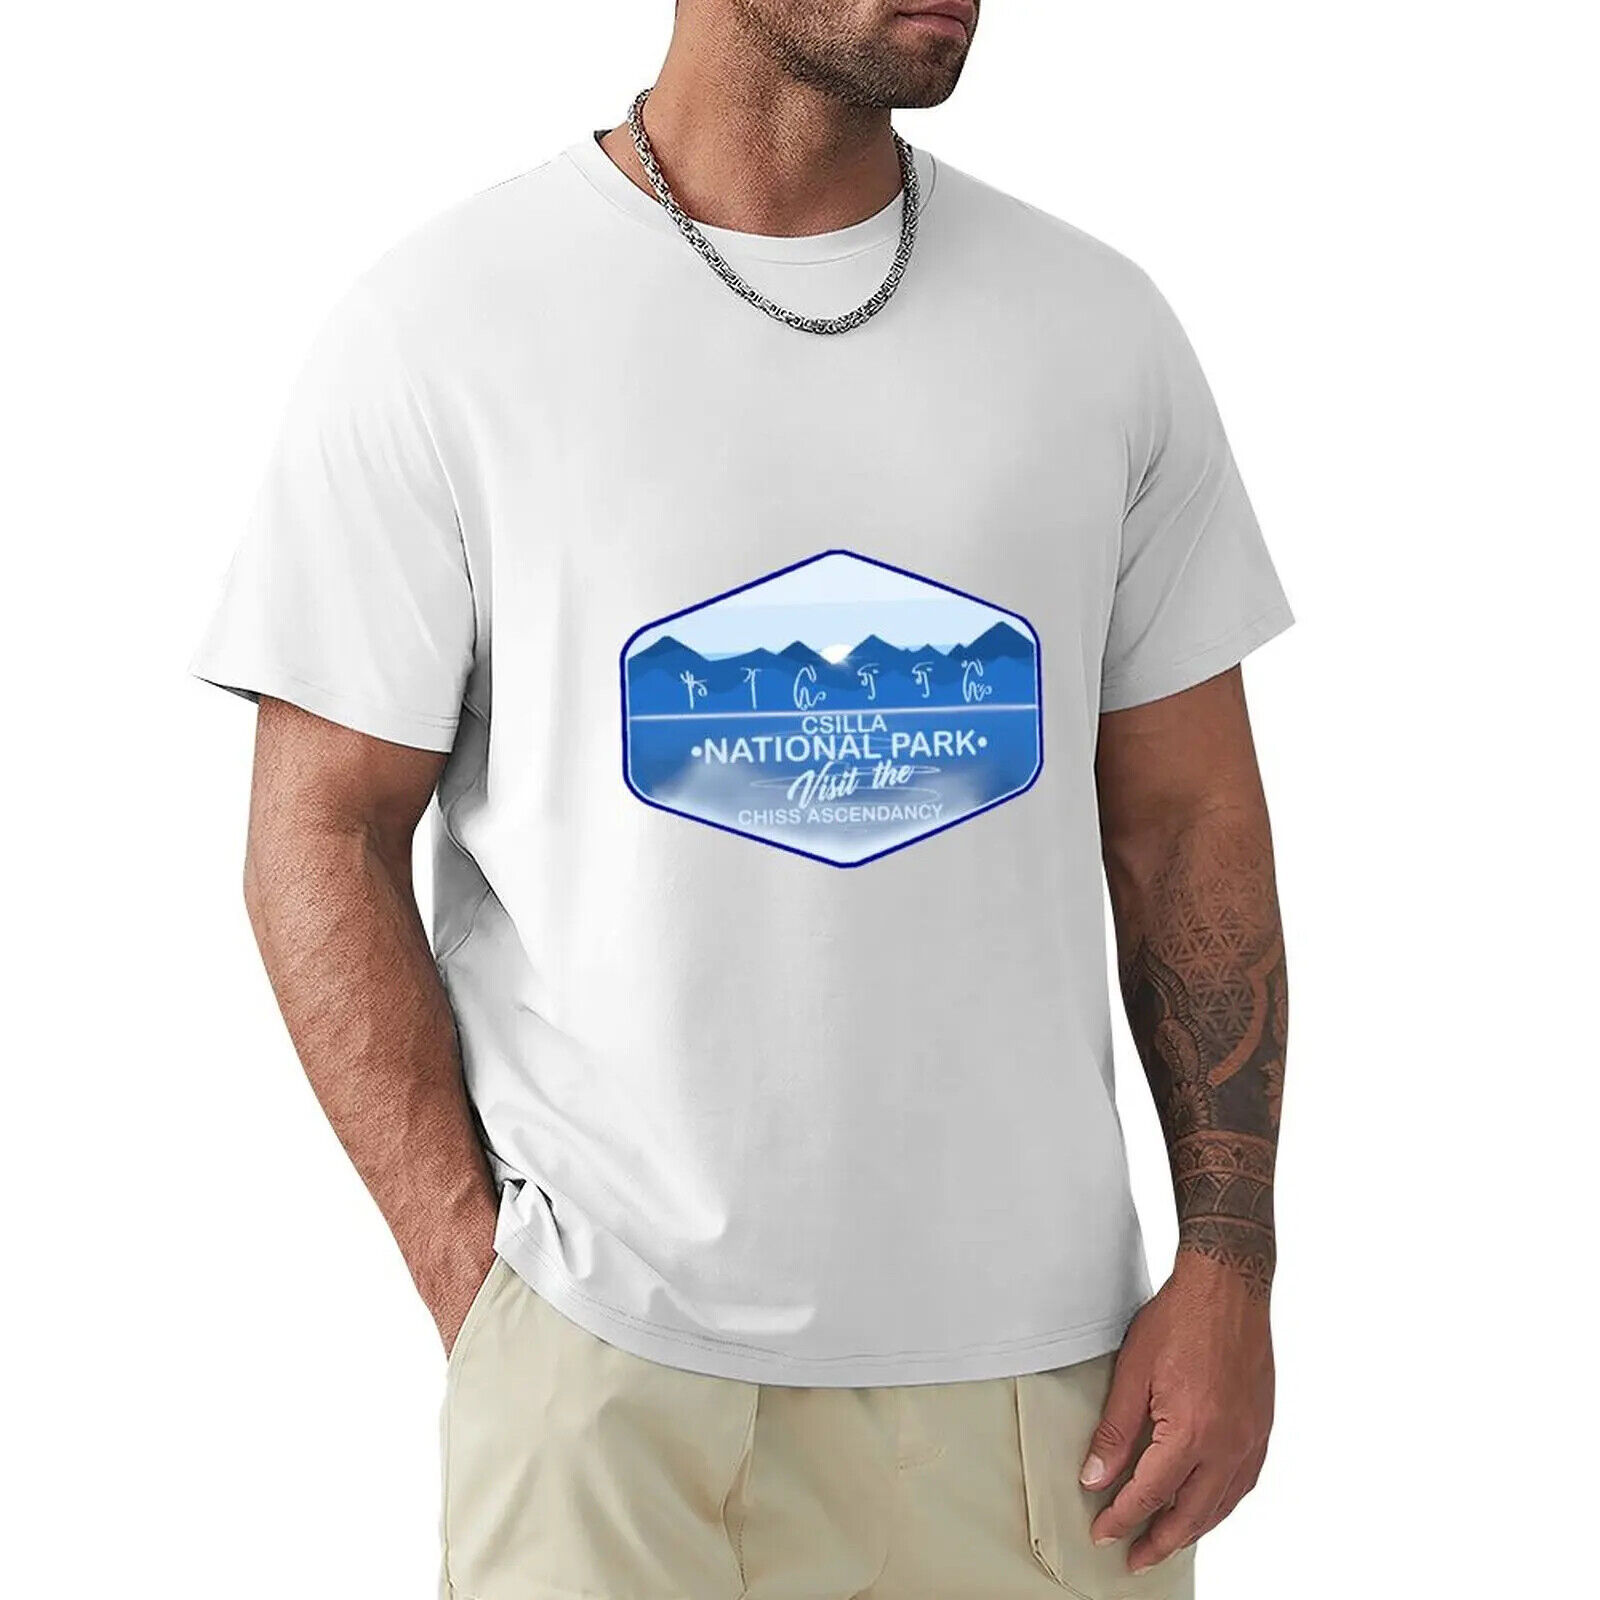 Csilla national park T-shirt kawaii clothes graphics vintage clothes mens vintag